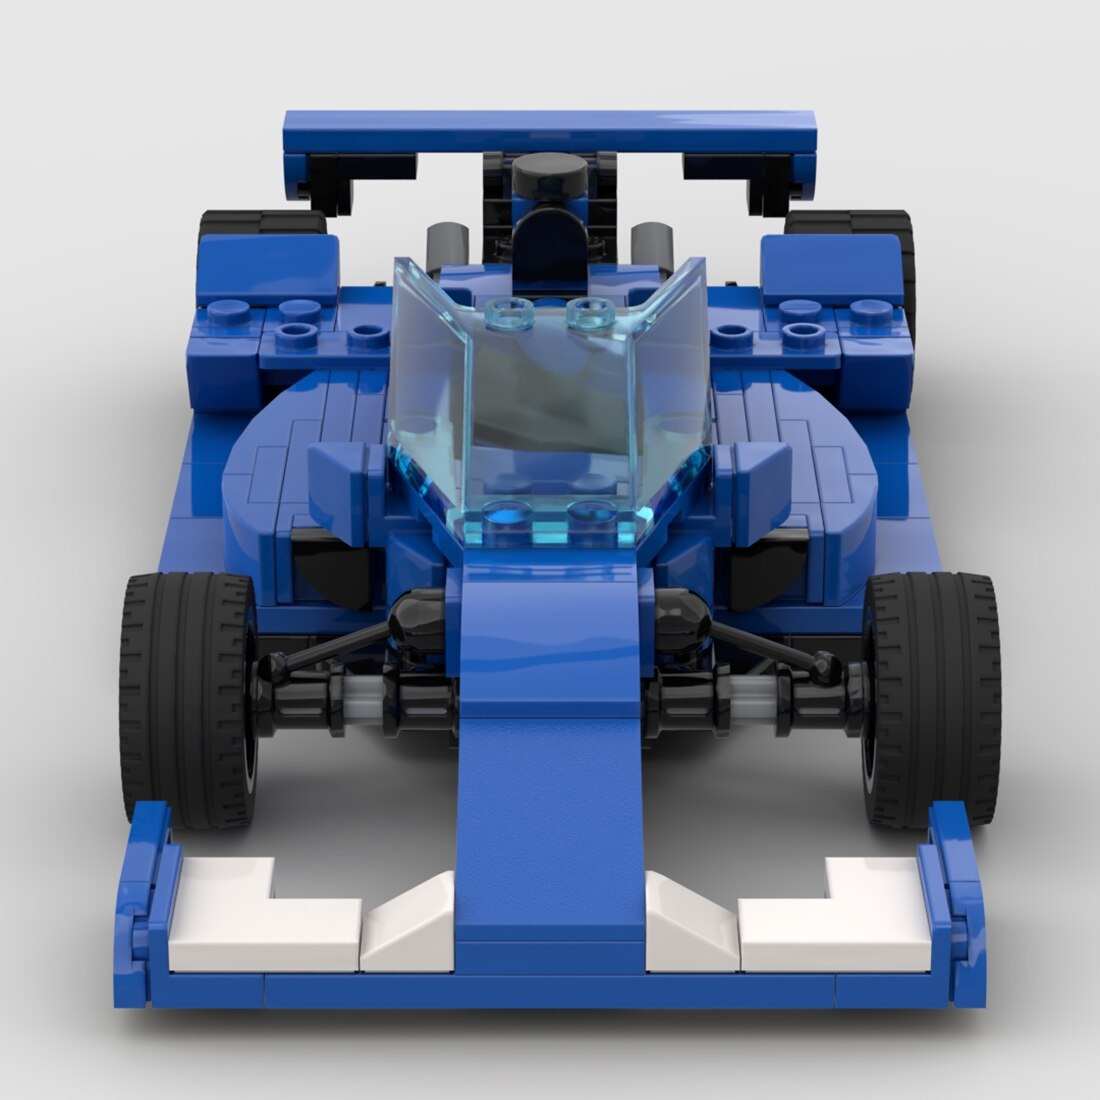 Indycar 2021 DRR Karam Oval Spec MOC-92335 Technic With 253 Pieces